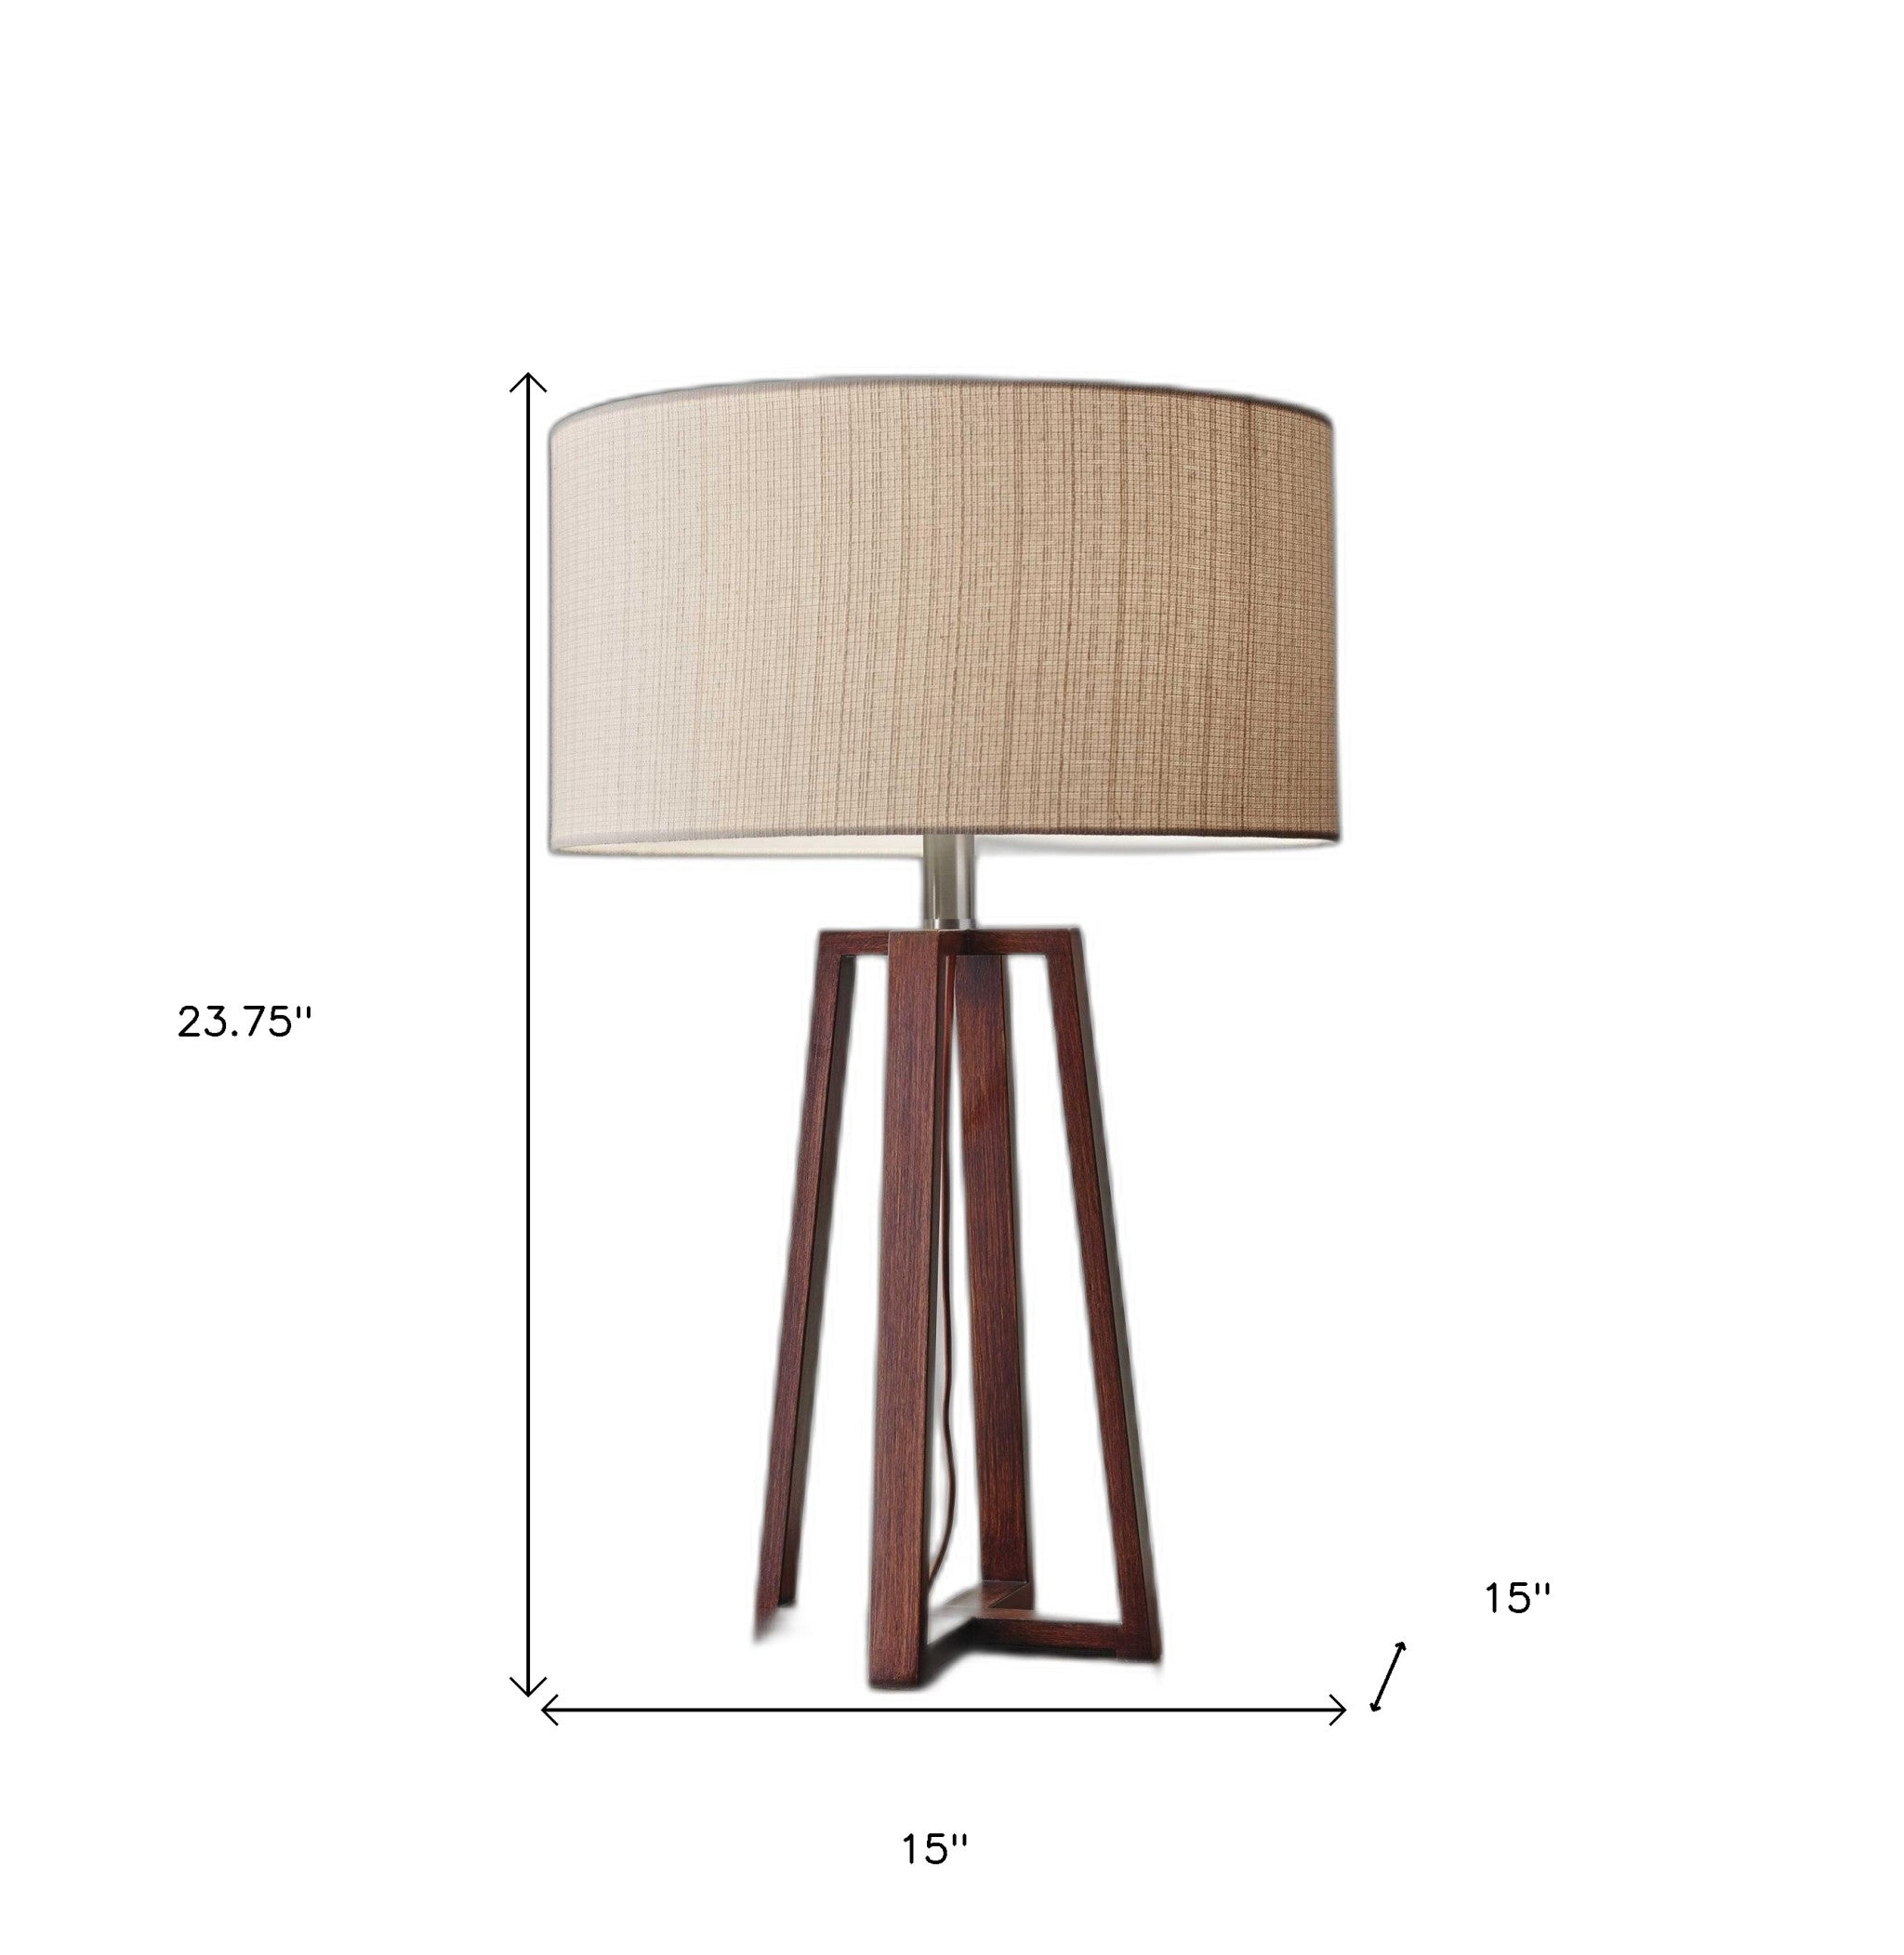 Walnut Wood Finish Linen Fabric Shade Table Lamp